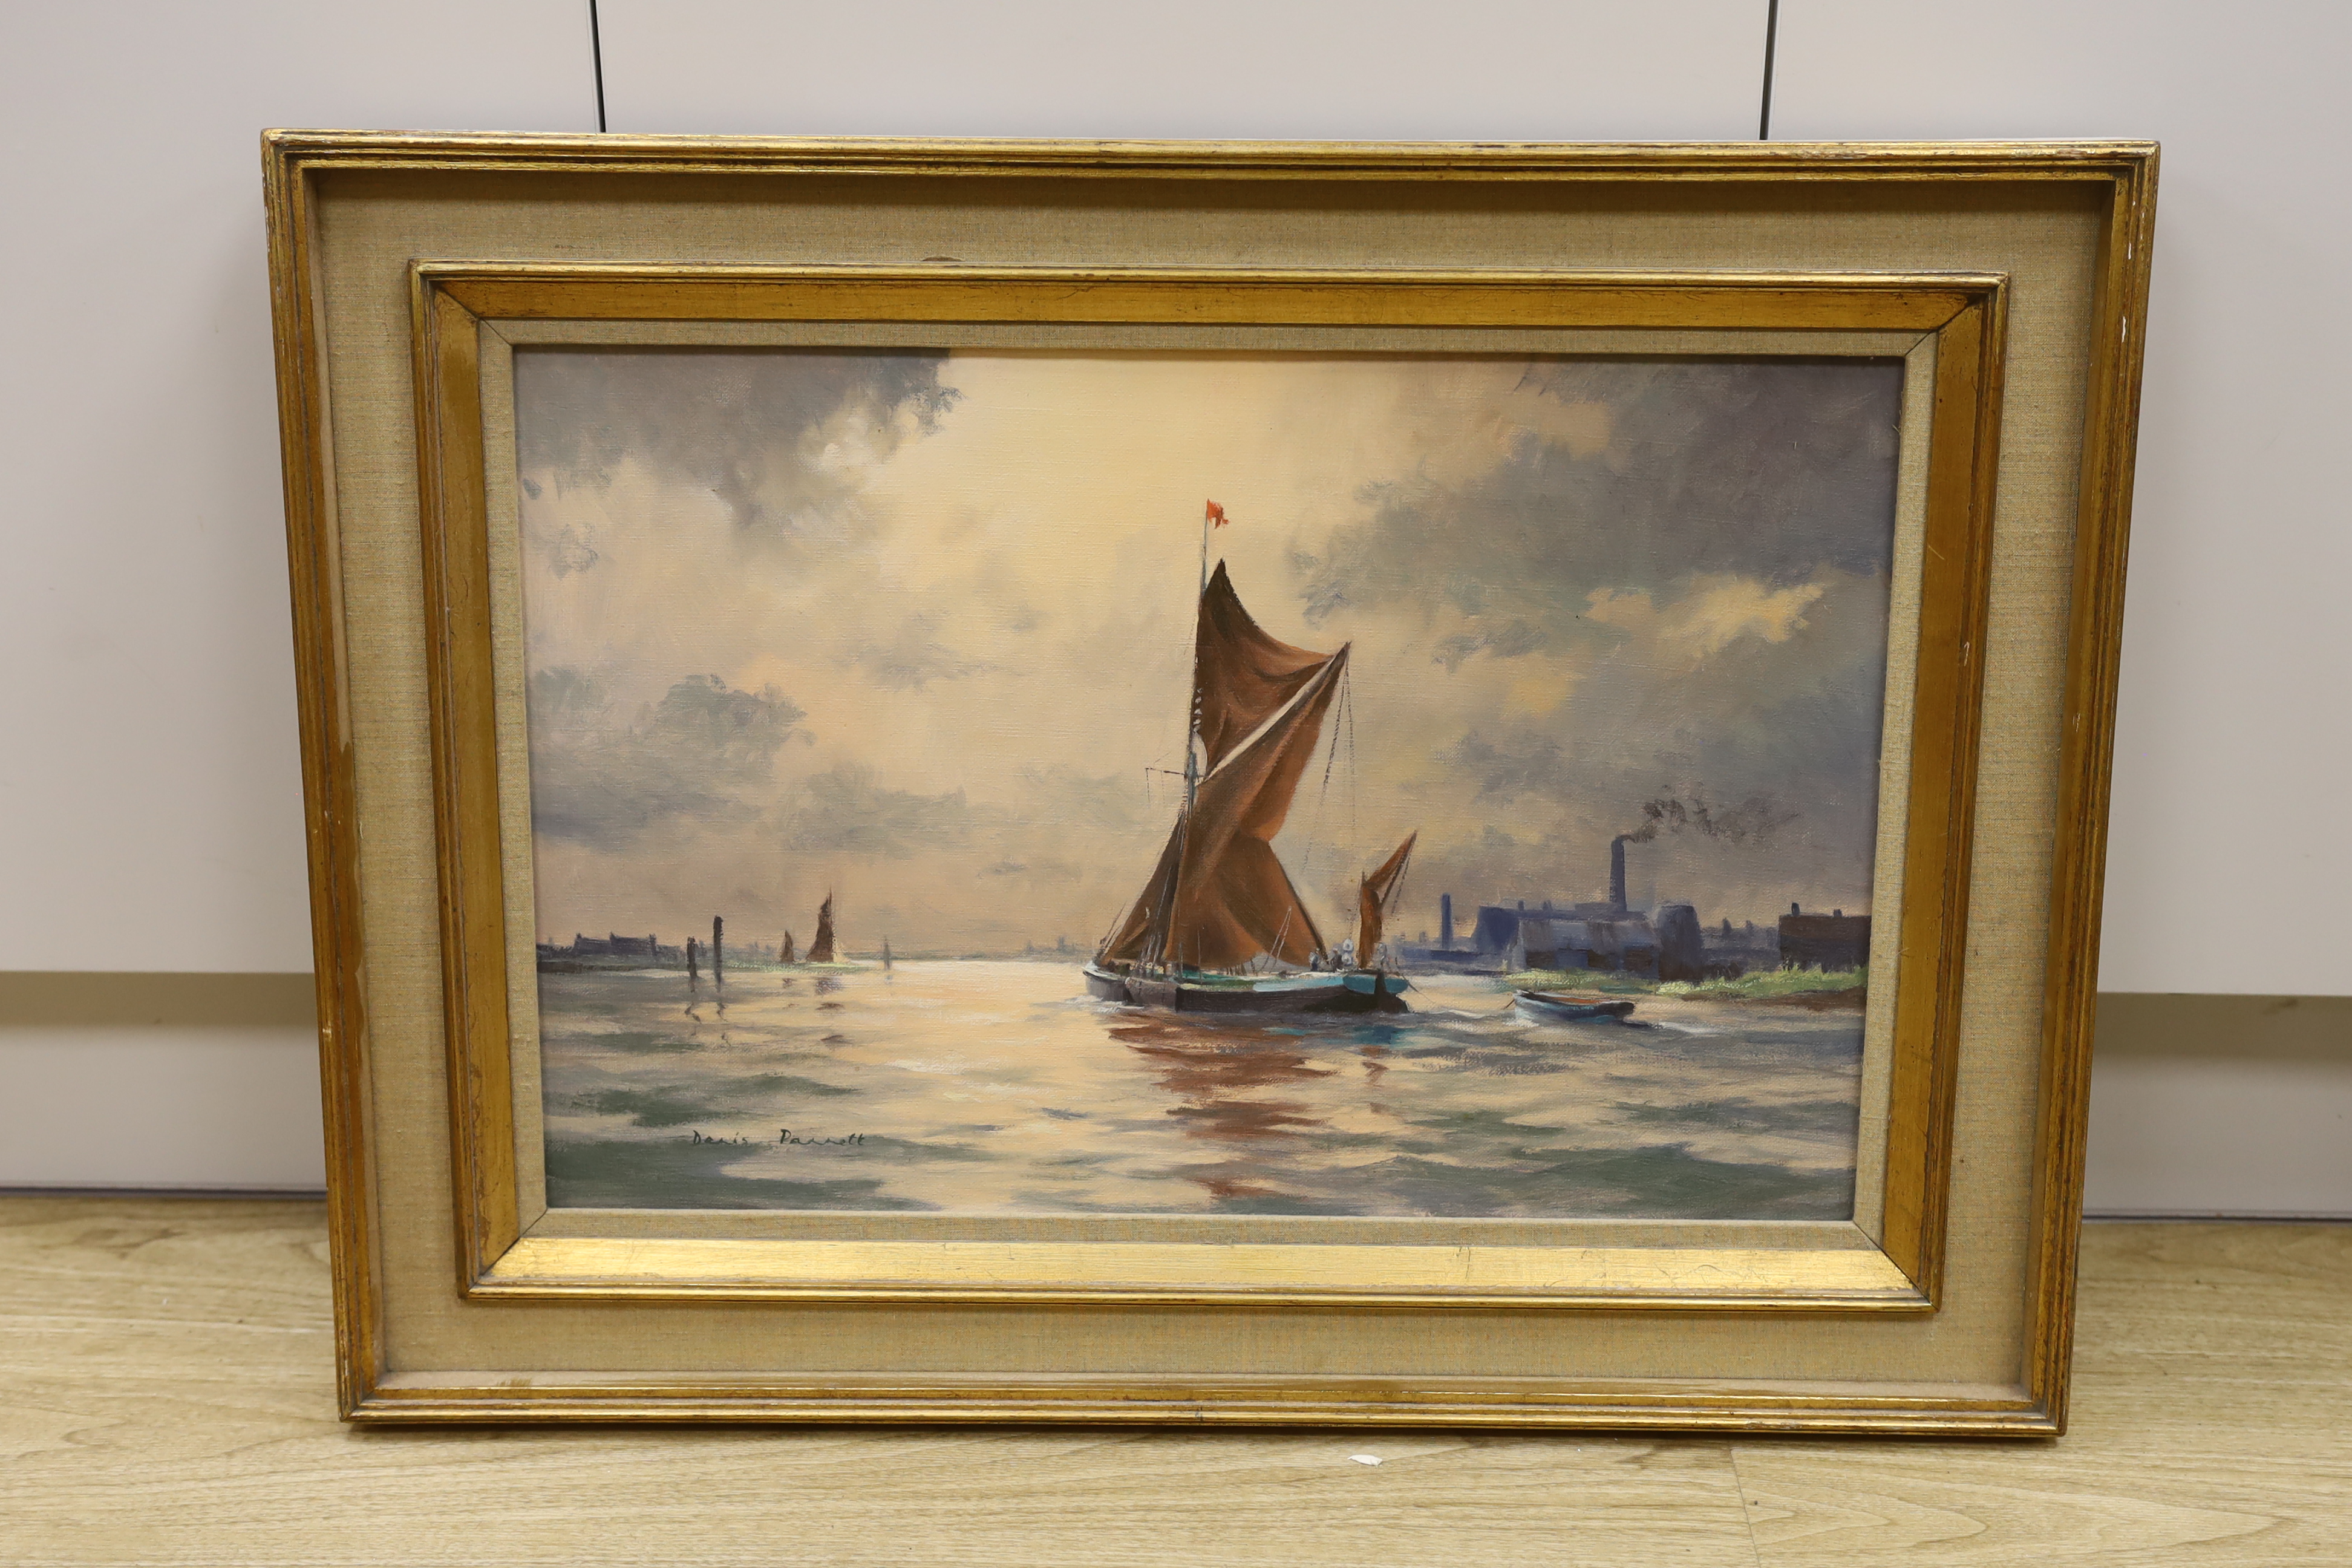 Denis Pannett (b.1939), oil on canvas, Estuary scene with boats, signed, 39 x 59cm